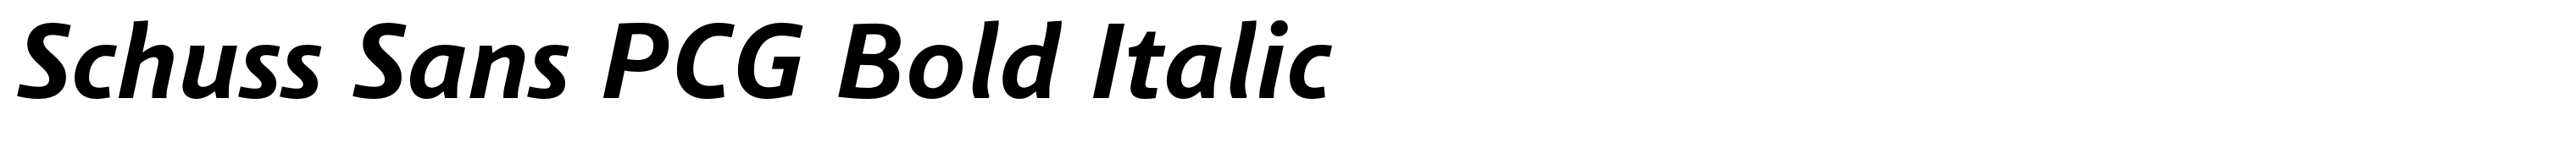 Schuss Sans PCG Bold Italic